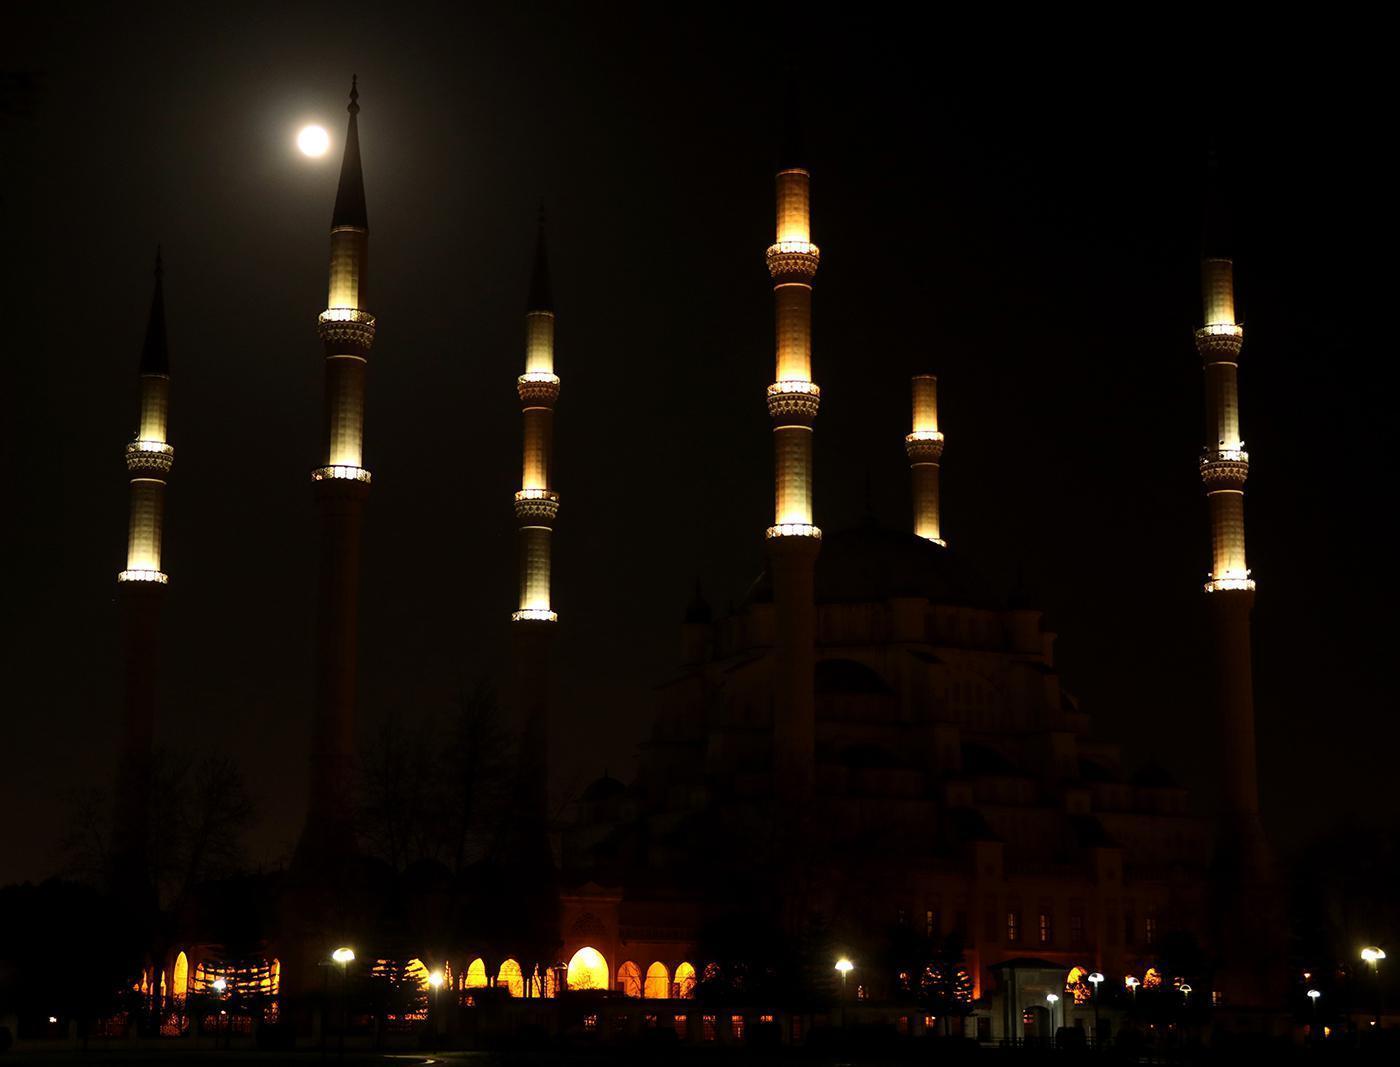 İstanbulda Süper Ay kartpostallık görüntüler oluşturdu